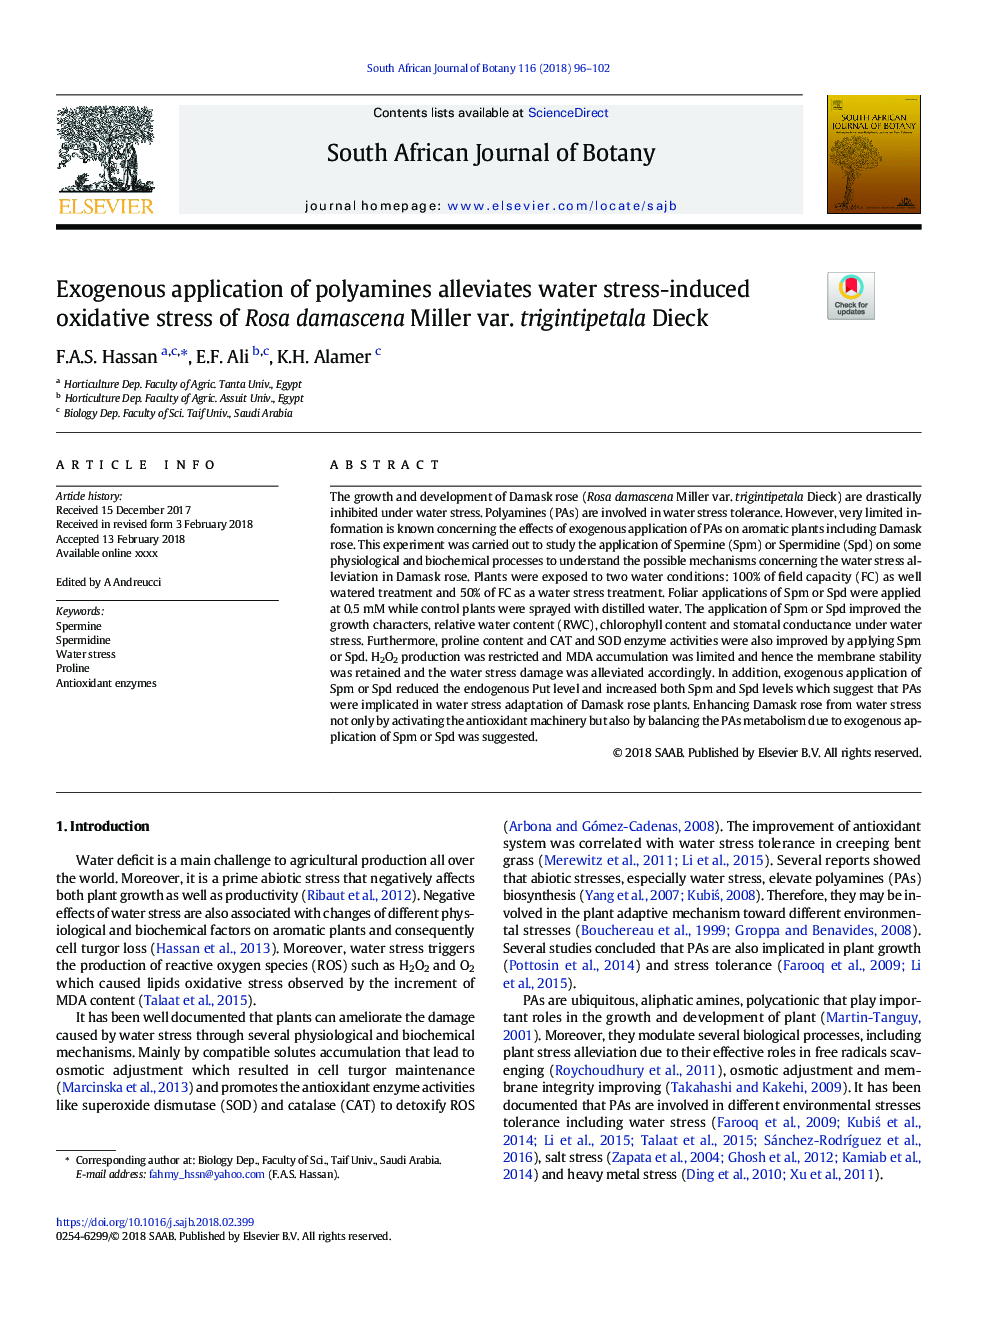 Exogenous application of polyamines alleviates water stress-induced oxidative stress of Rosa damascena Miller var. trigintipetala Dieck